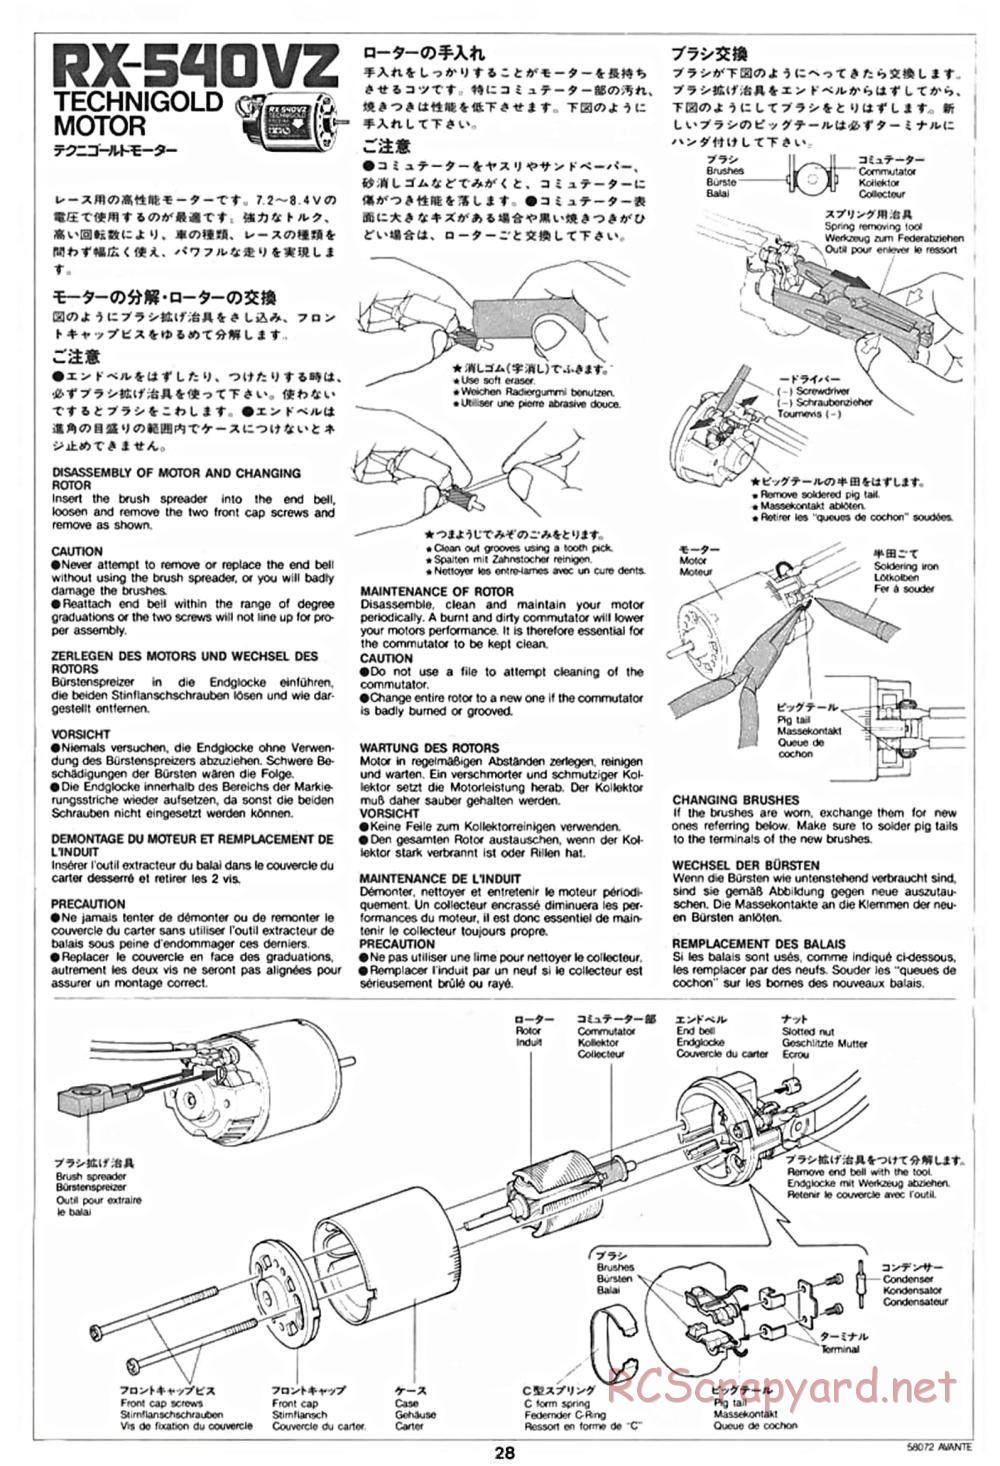 Tamiya - Avante - 58072 - Manual - Page 28